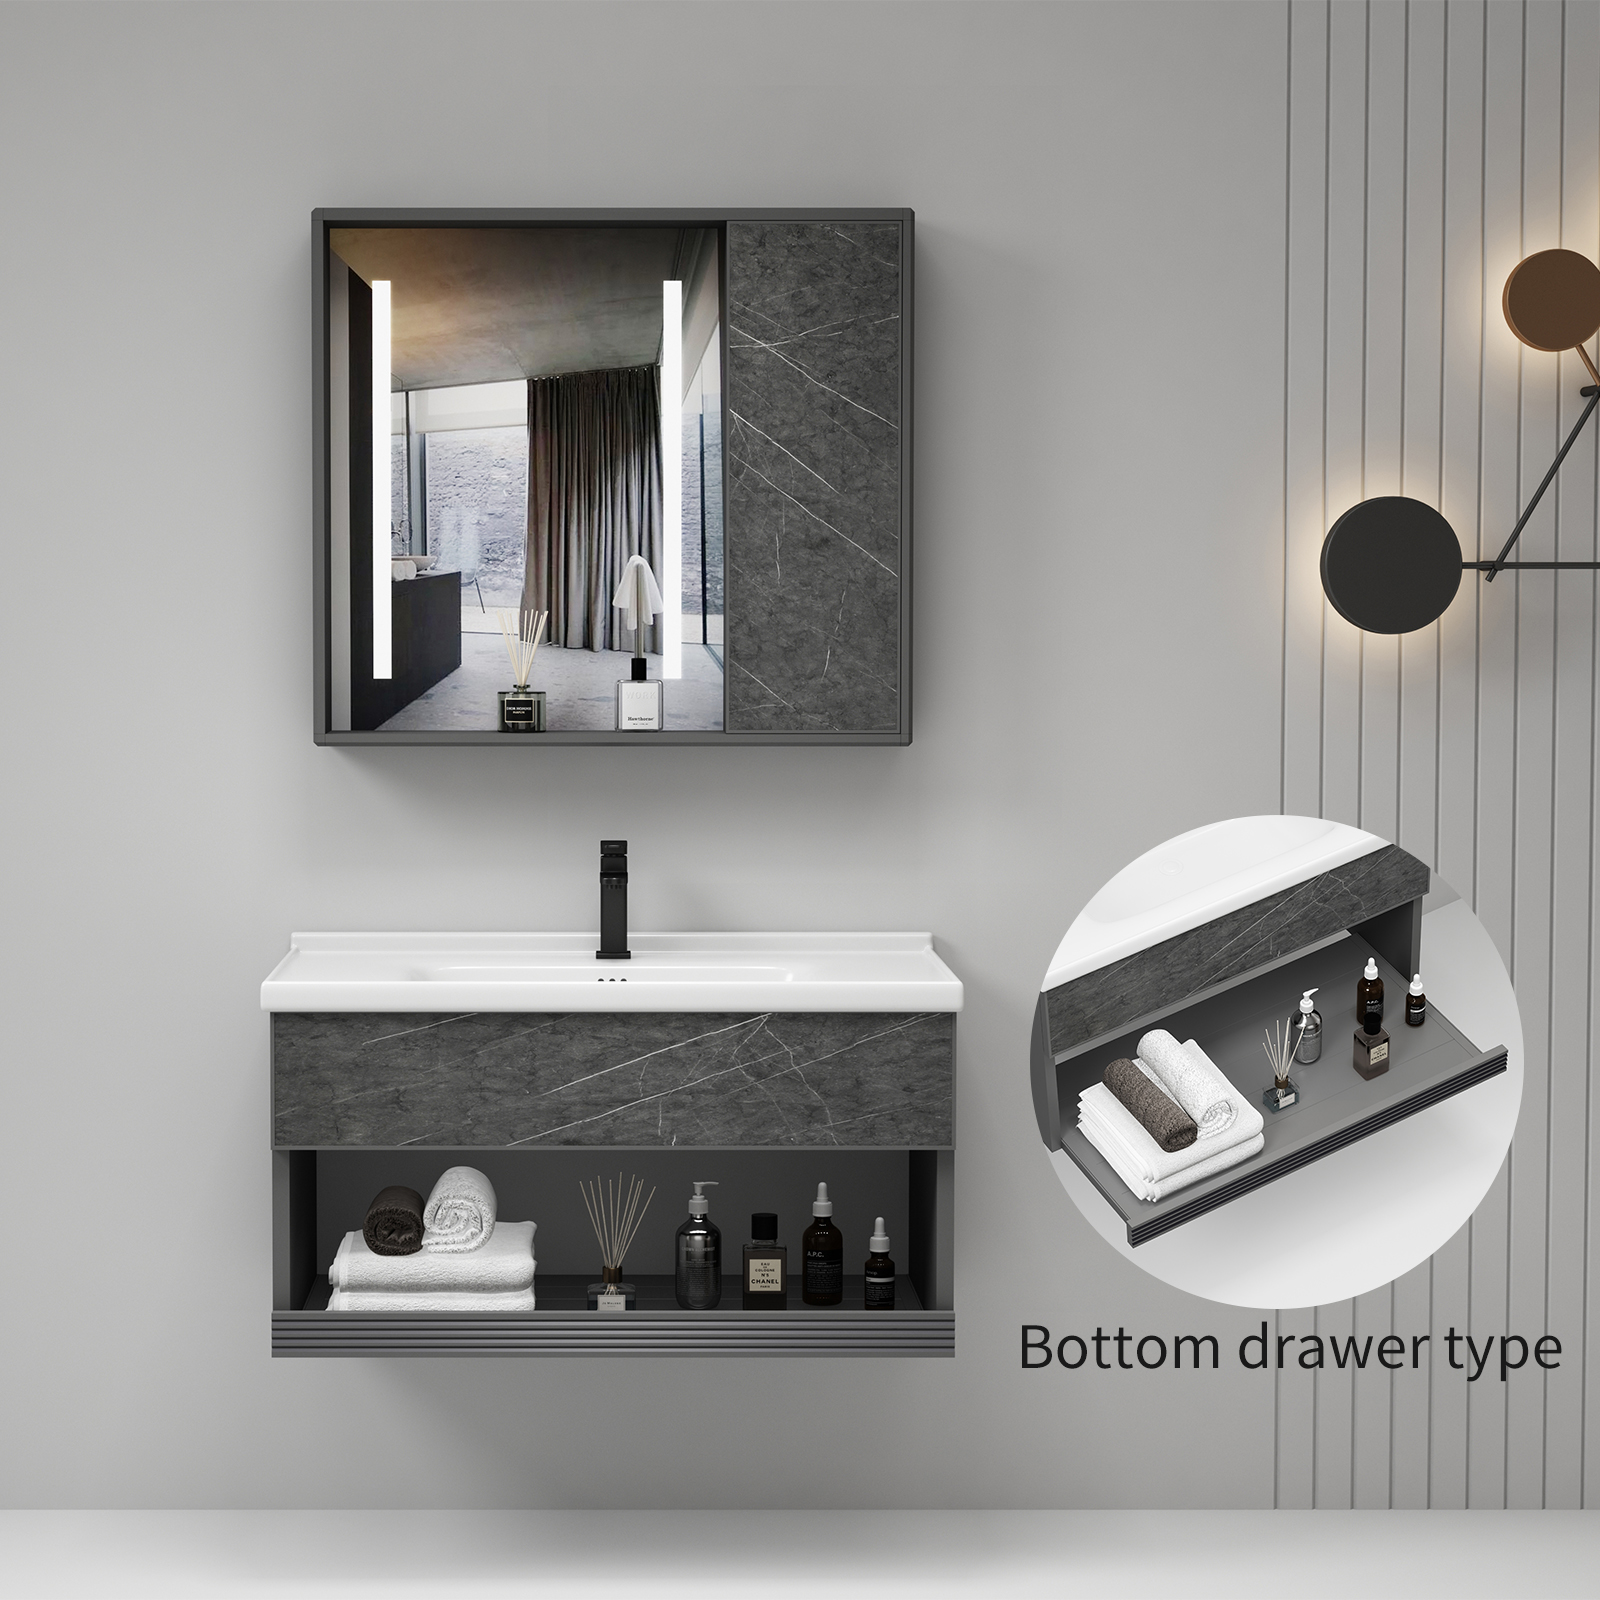 LED 조명 거울이 있는 새로운 싱크 맞춤형 캐비닛 알루미늄 욕실 캐비닛은 호텔 홈 욕실 가구에 사용할 수 있습니다.